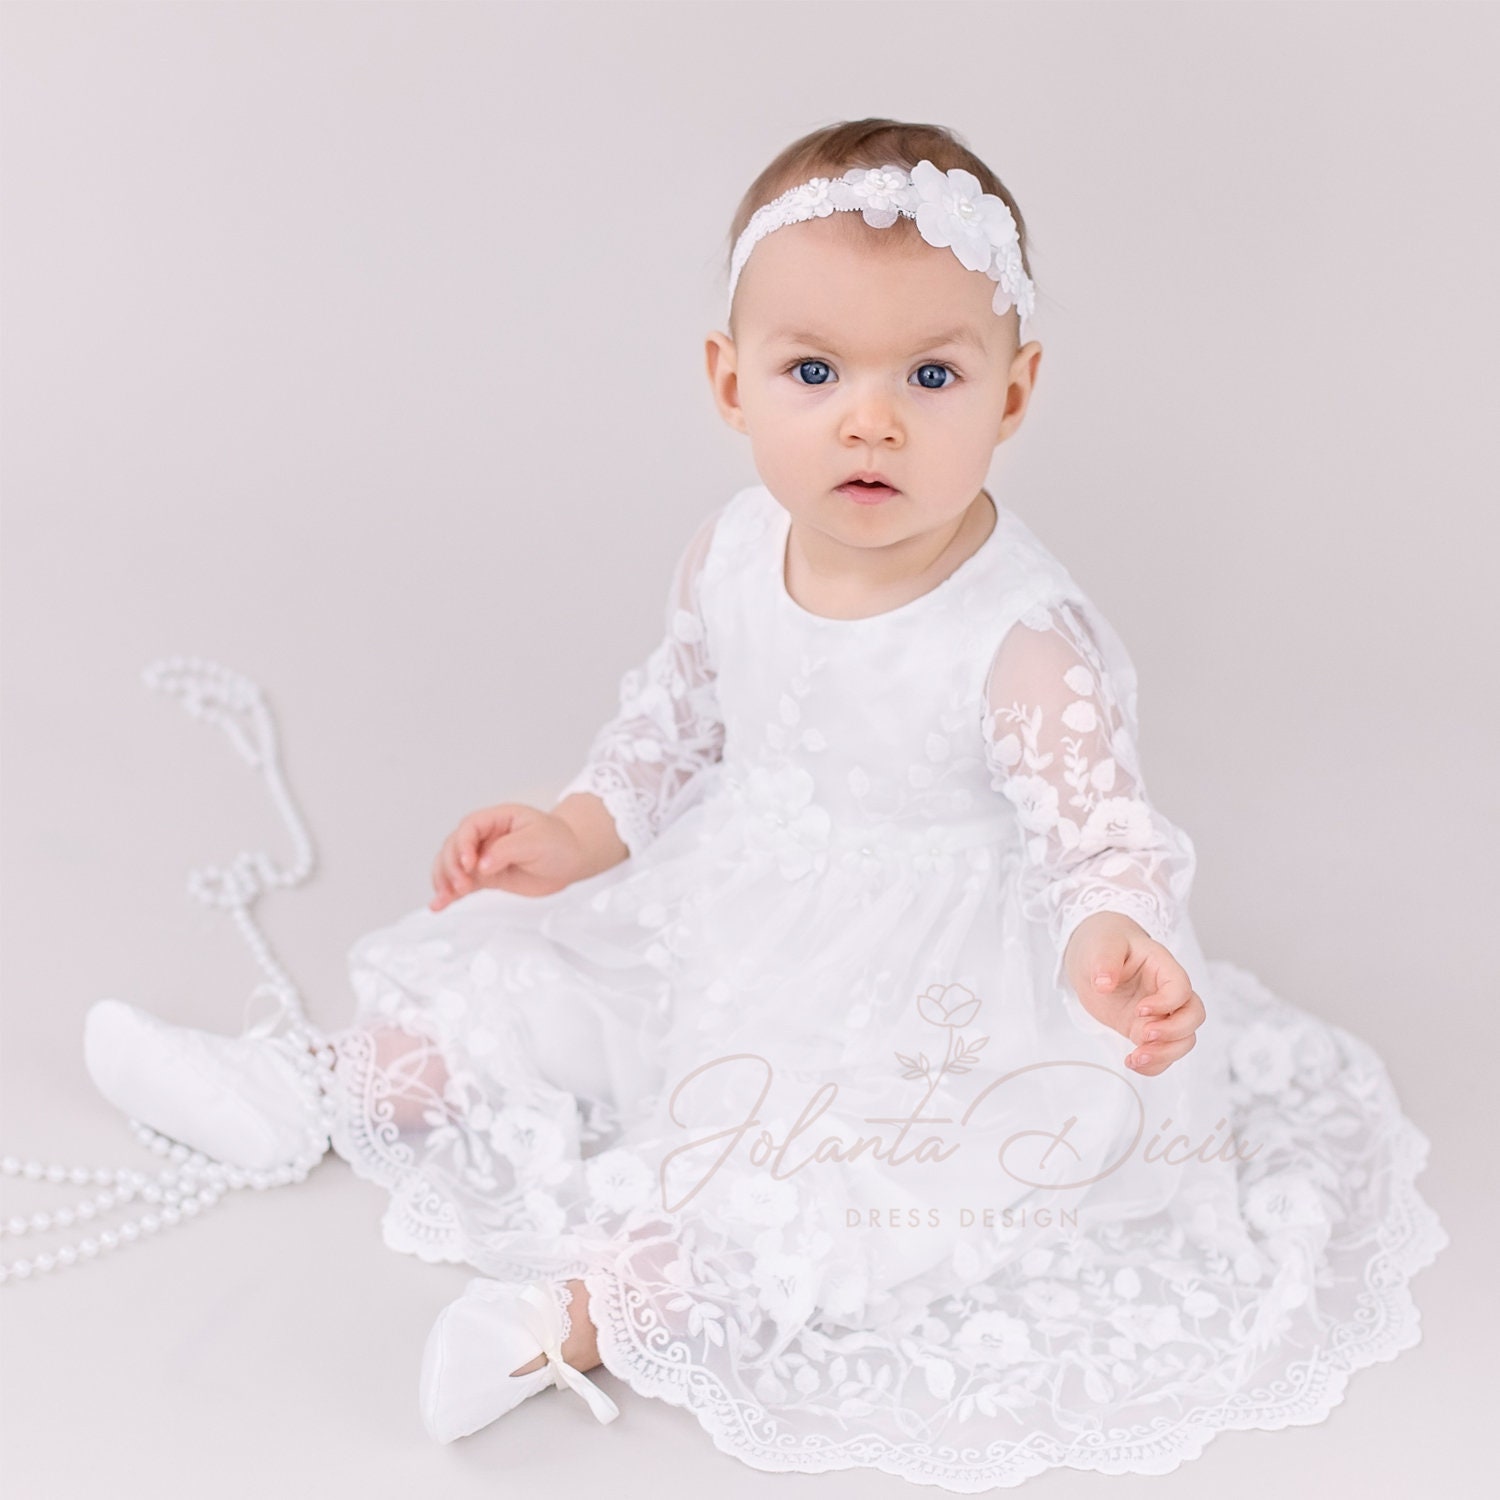 Baptism dress for baby girl long sleeve baptism dress | Etsy